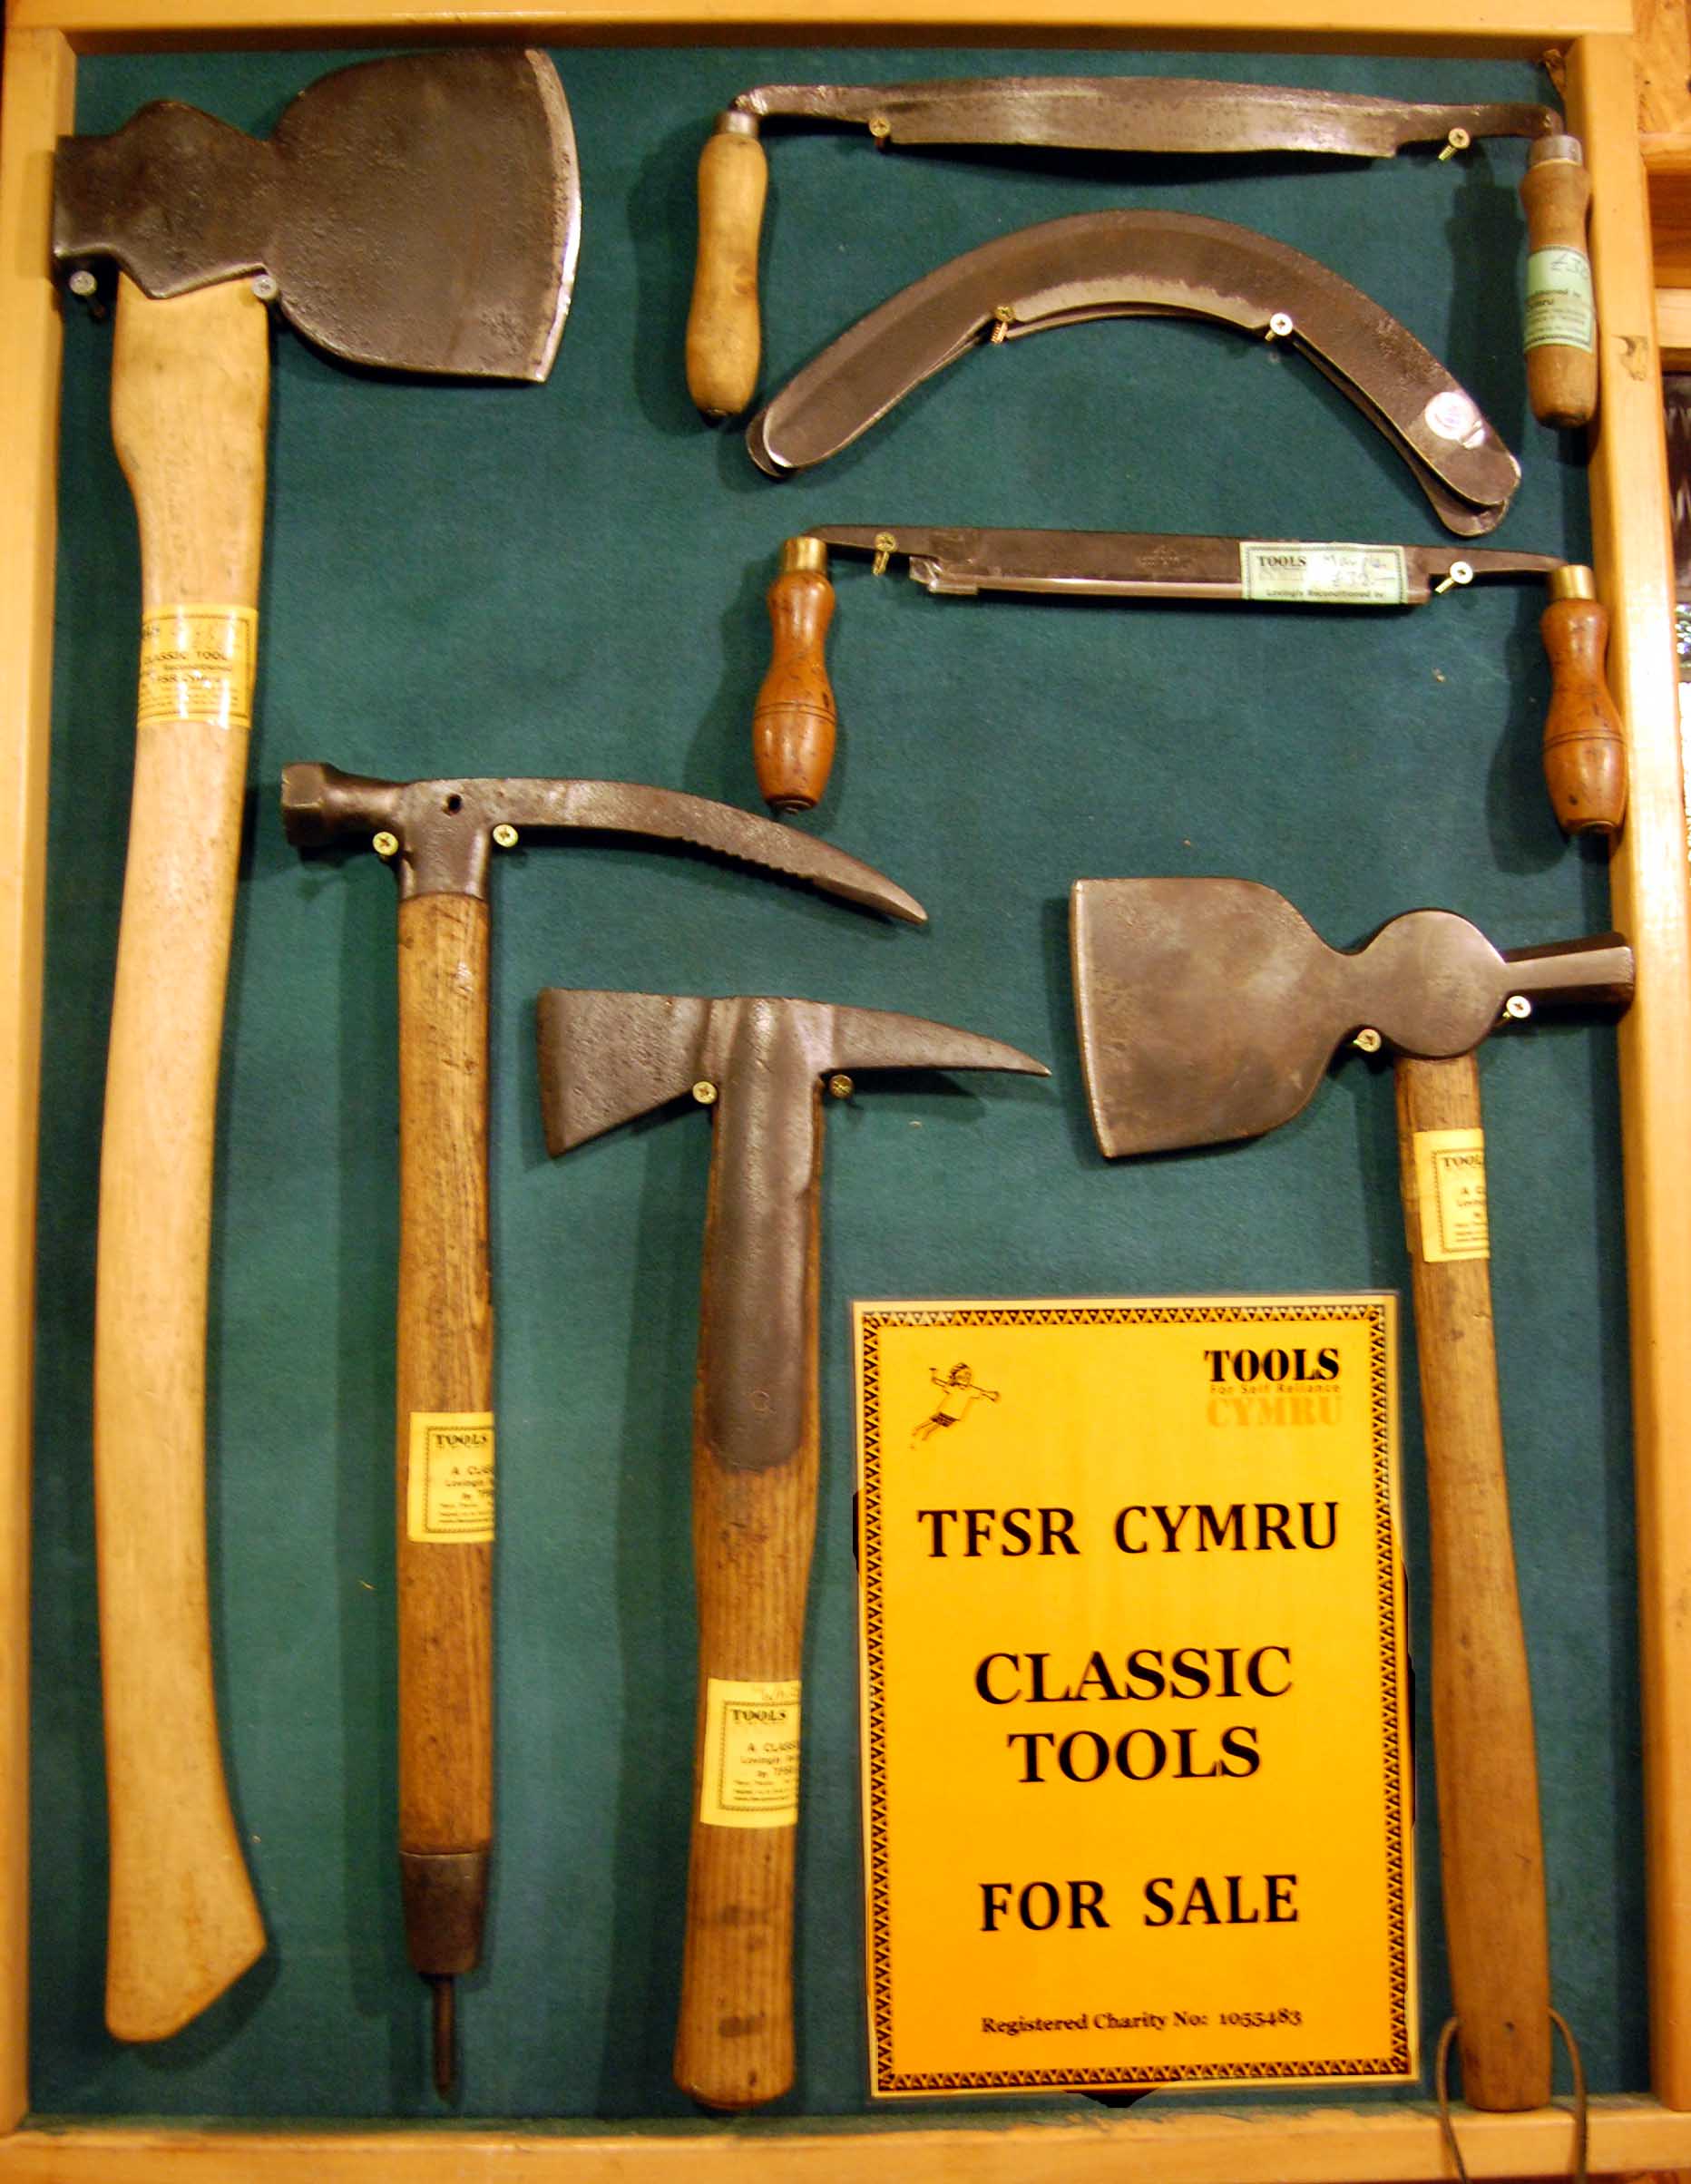 Classic tools. Боевые топоры вятичей. Топоры Хедебю. Старинные топоры. Древние боевые топоры.